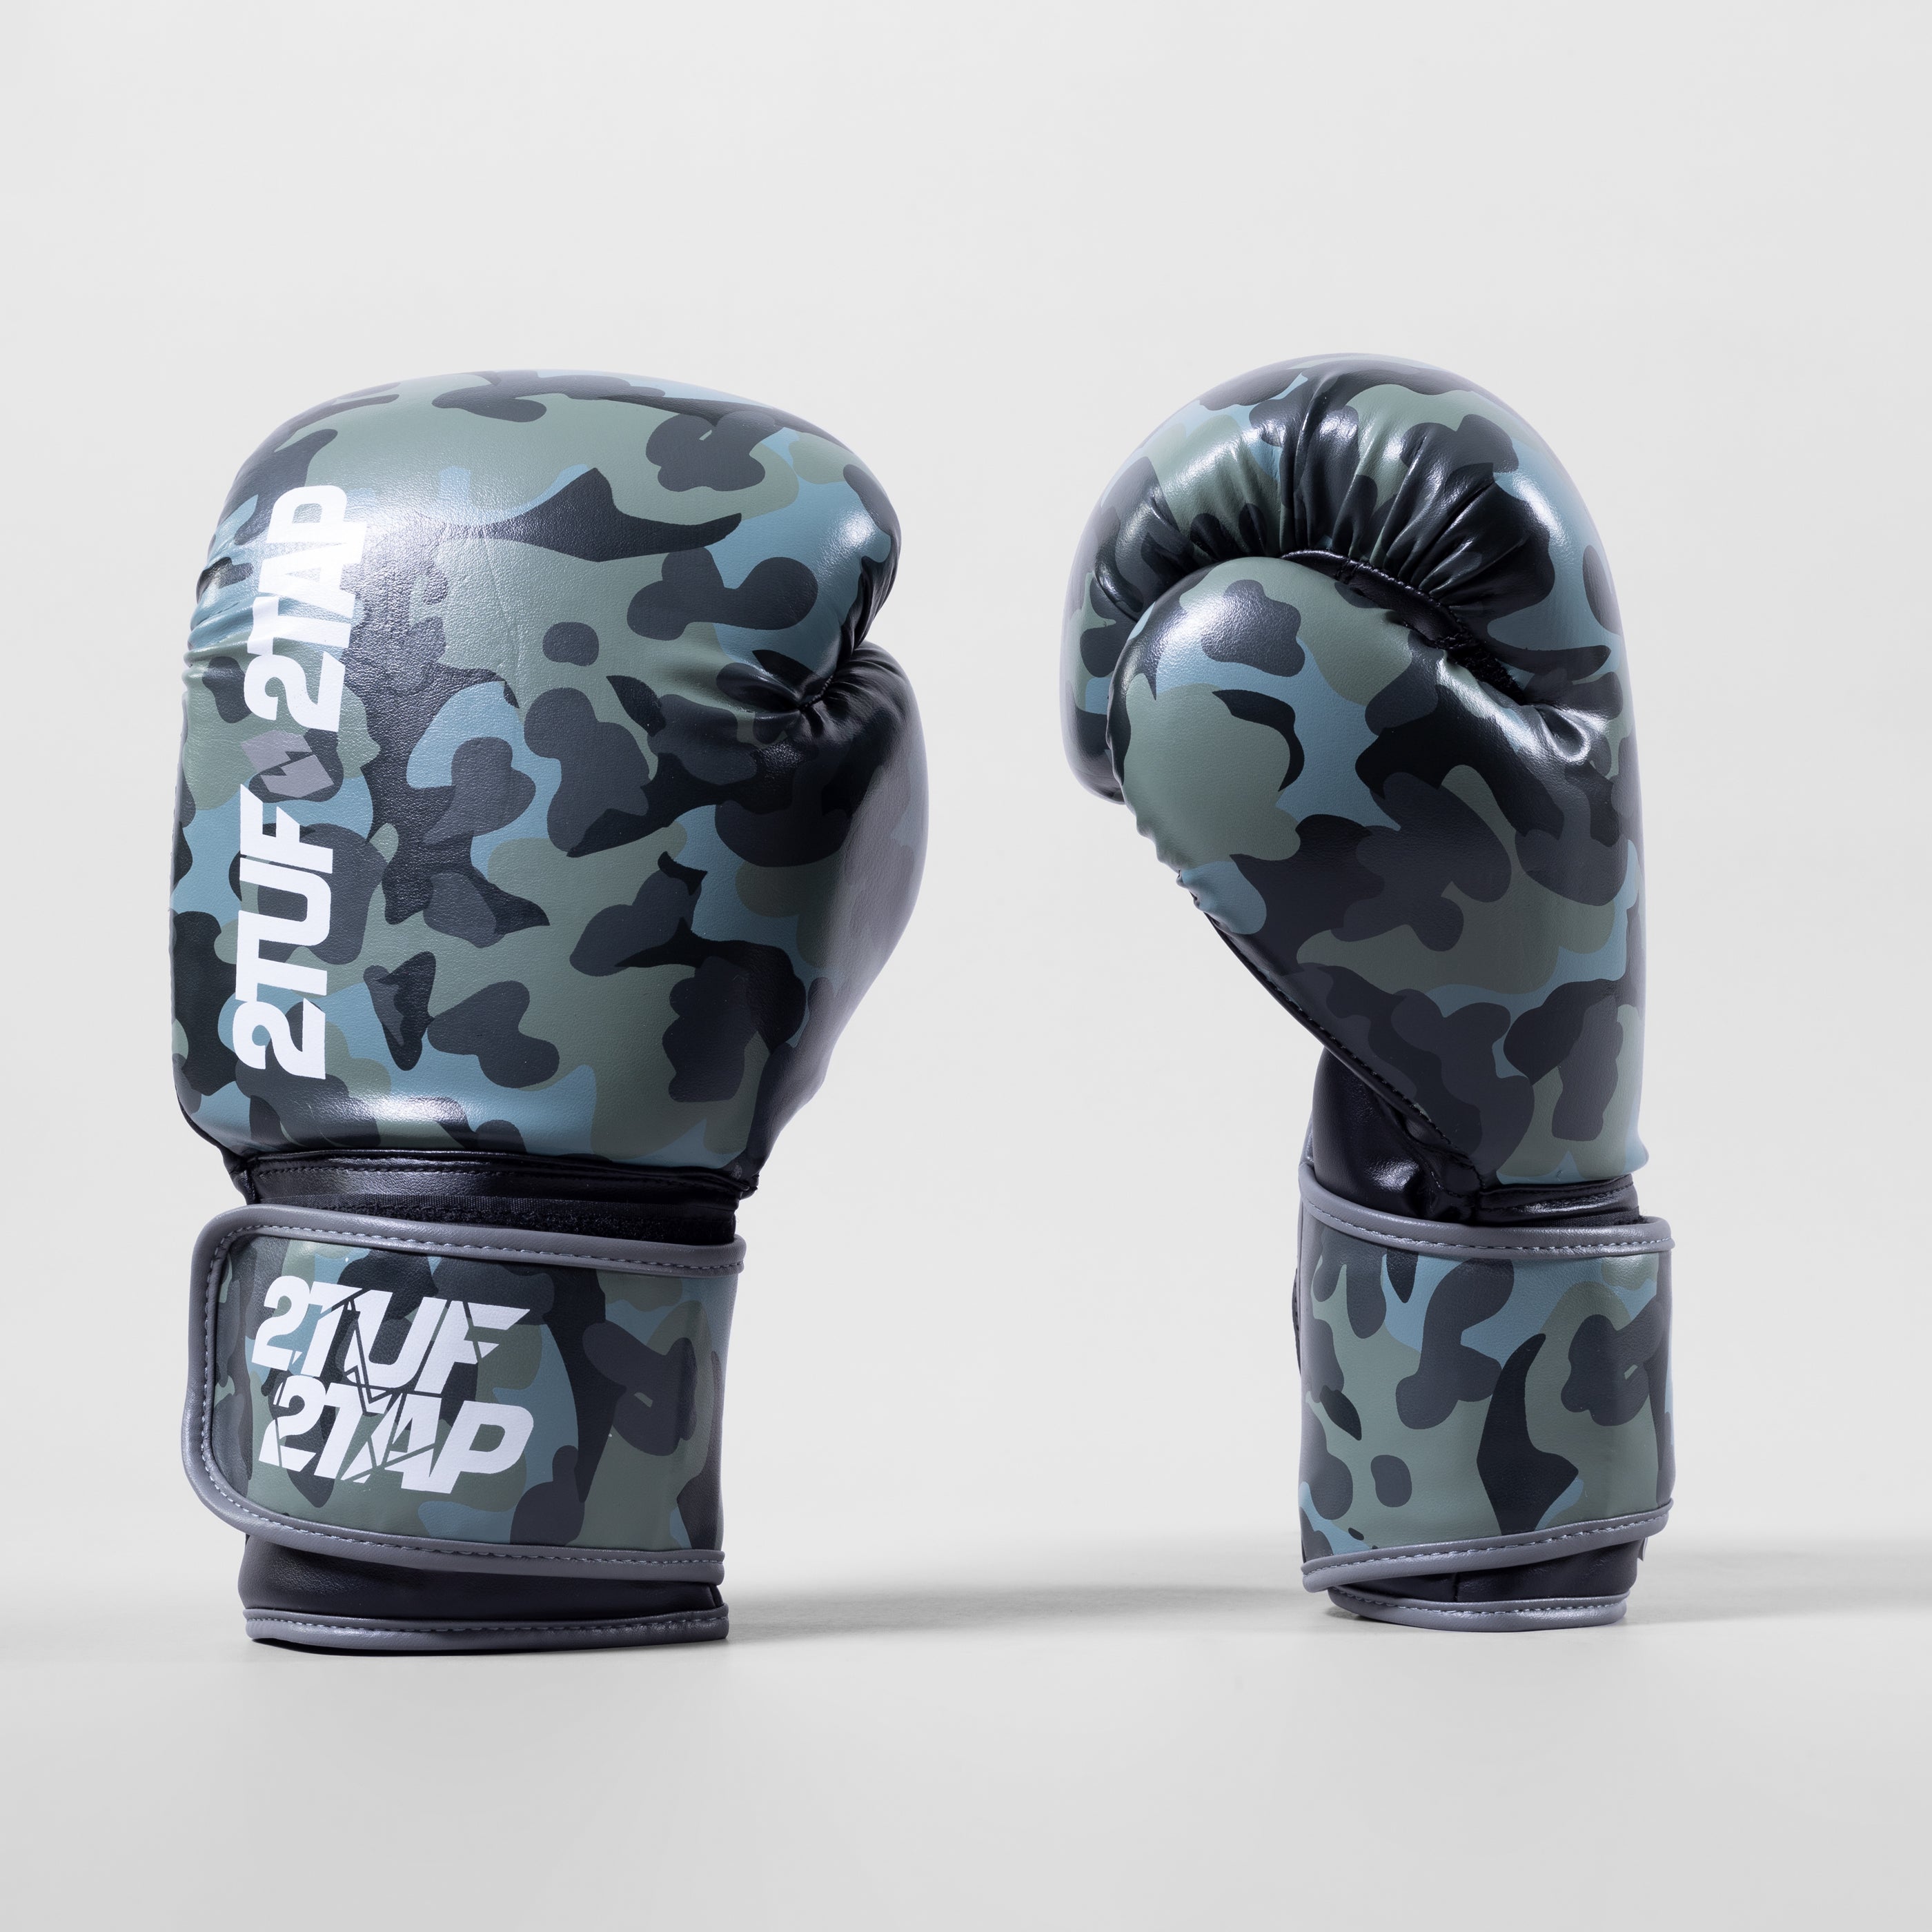 'Urban Camo' Boxing Gloves - Grey/Black 2TUF2TAP